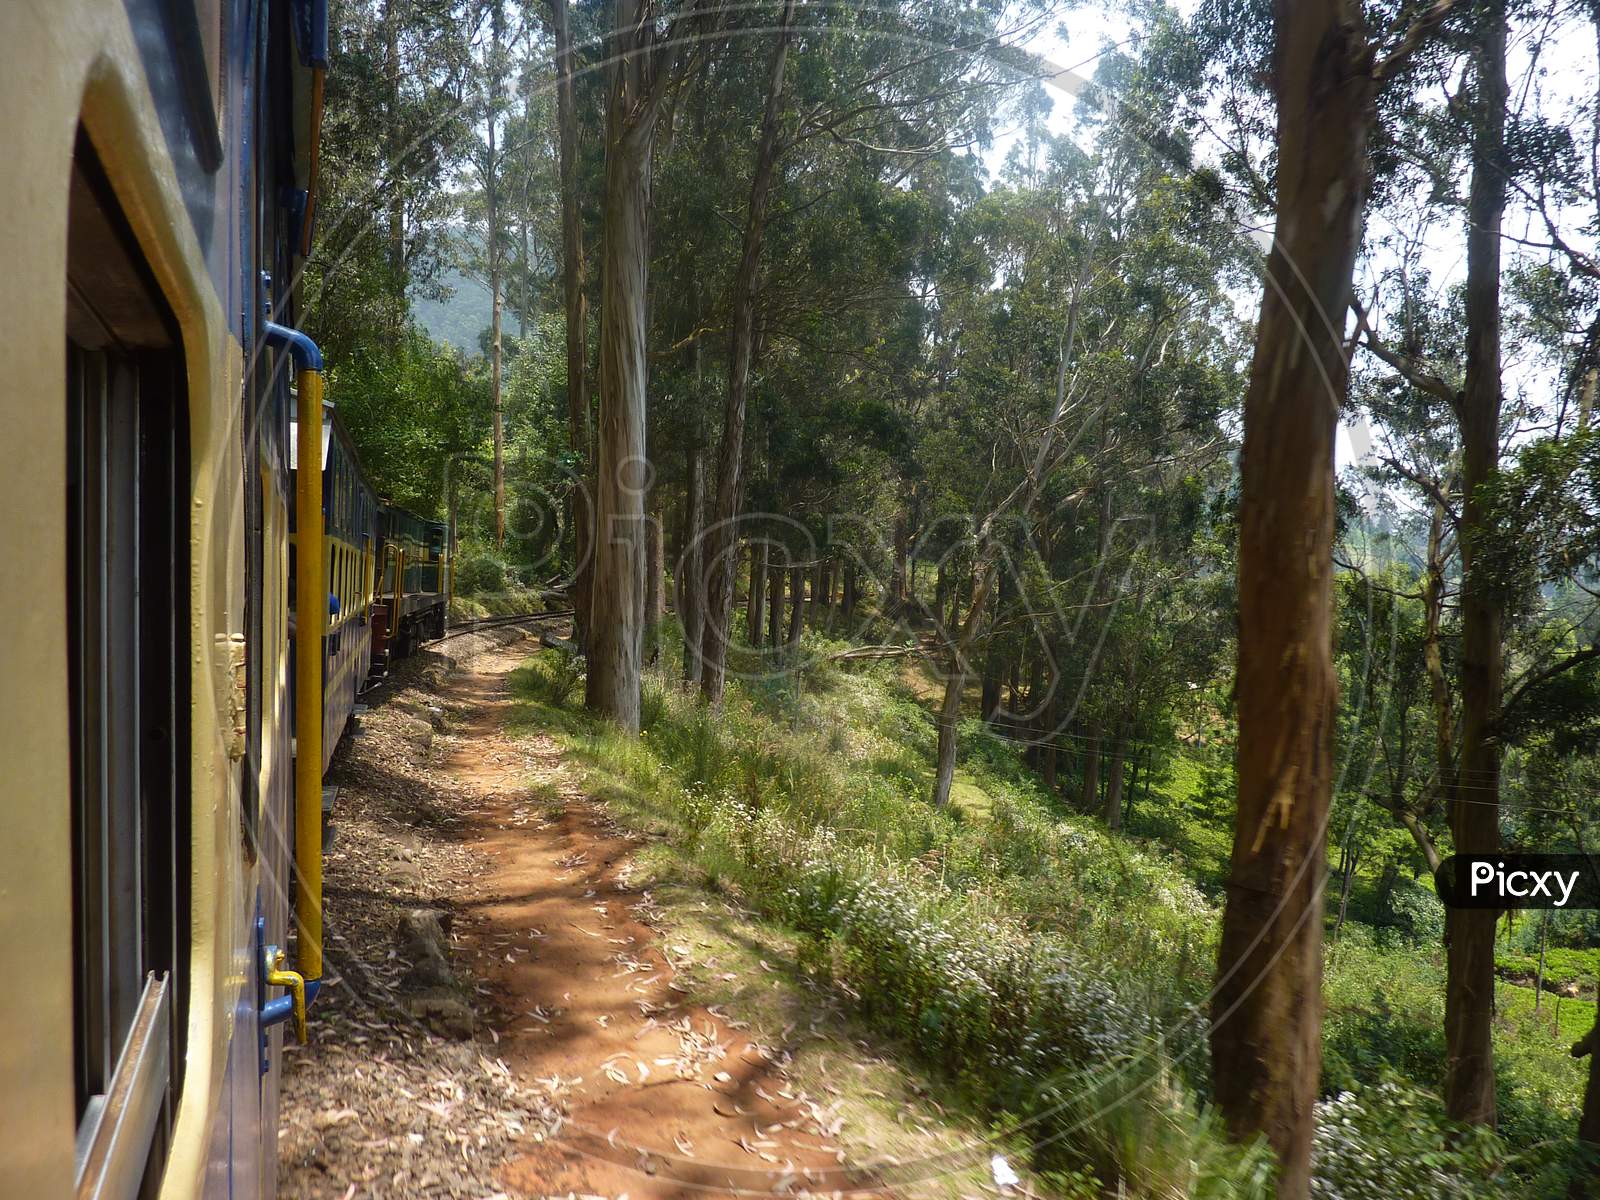 The Nilgiri Railways